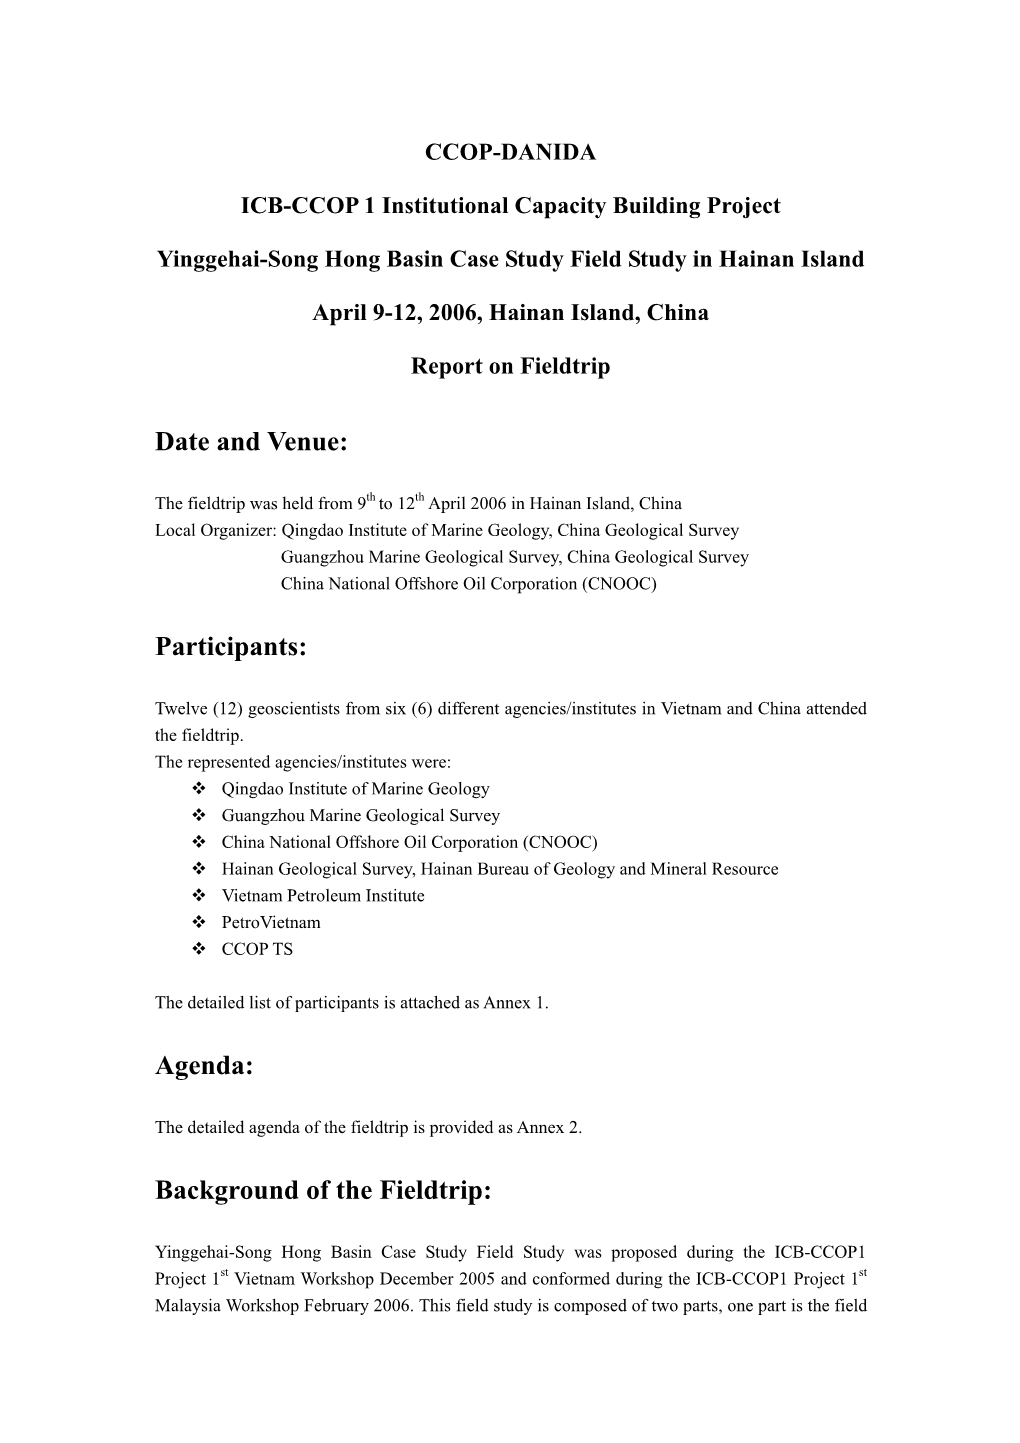 Yinggehai-Song Hong Basin Case Study Field Study in Hainan Island